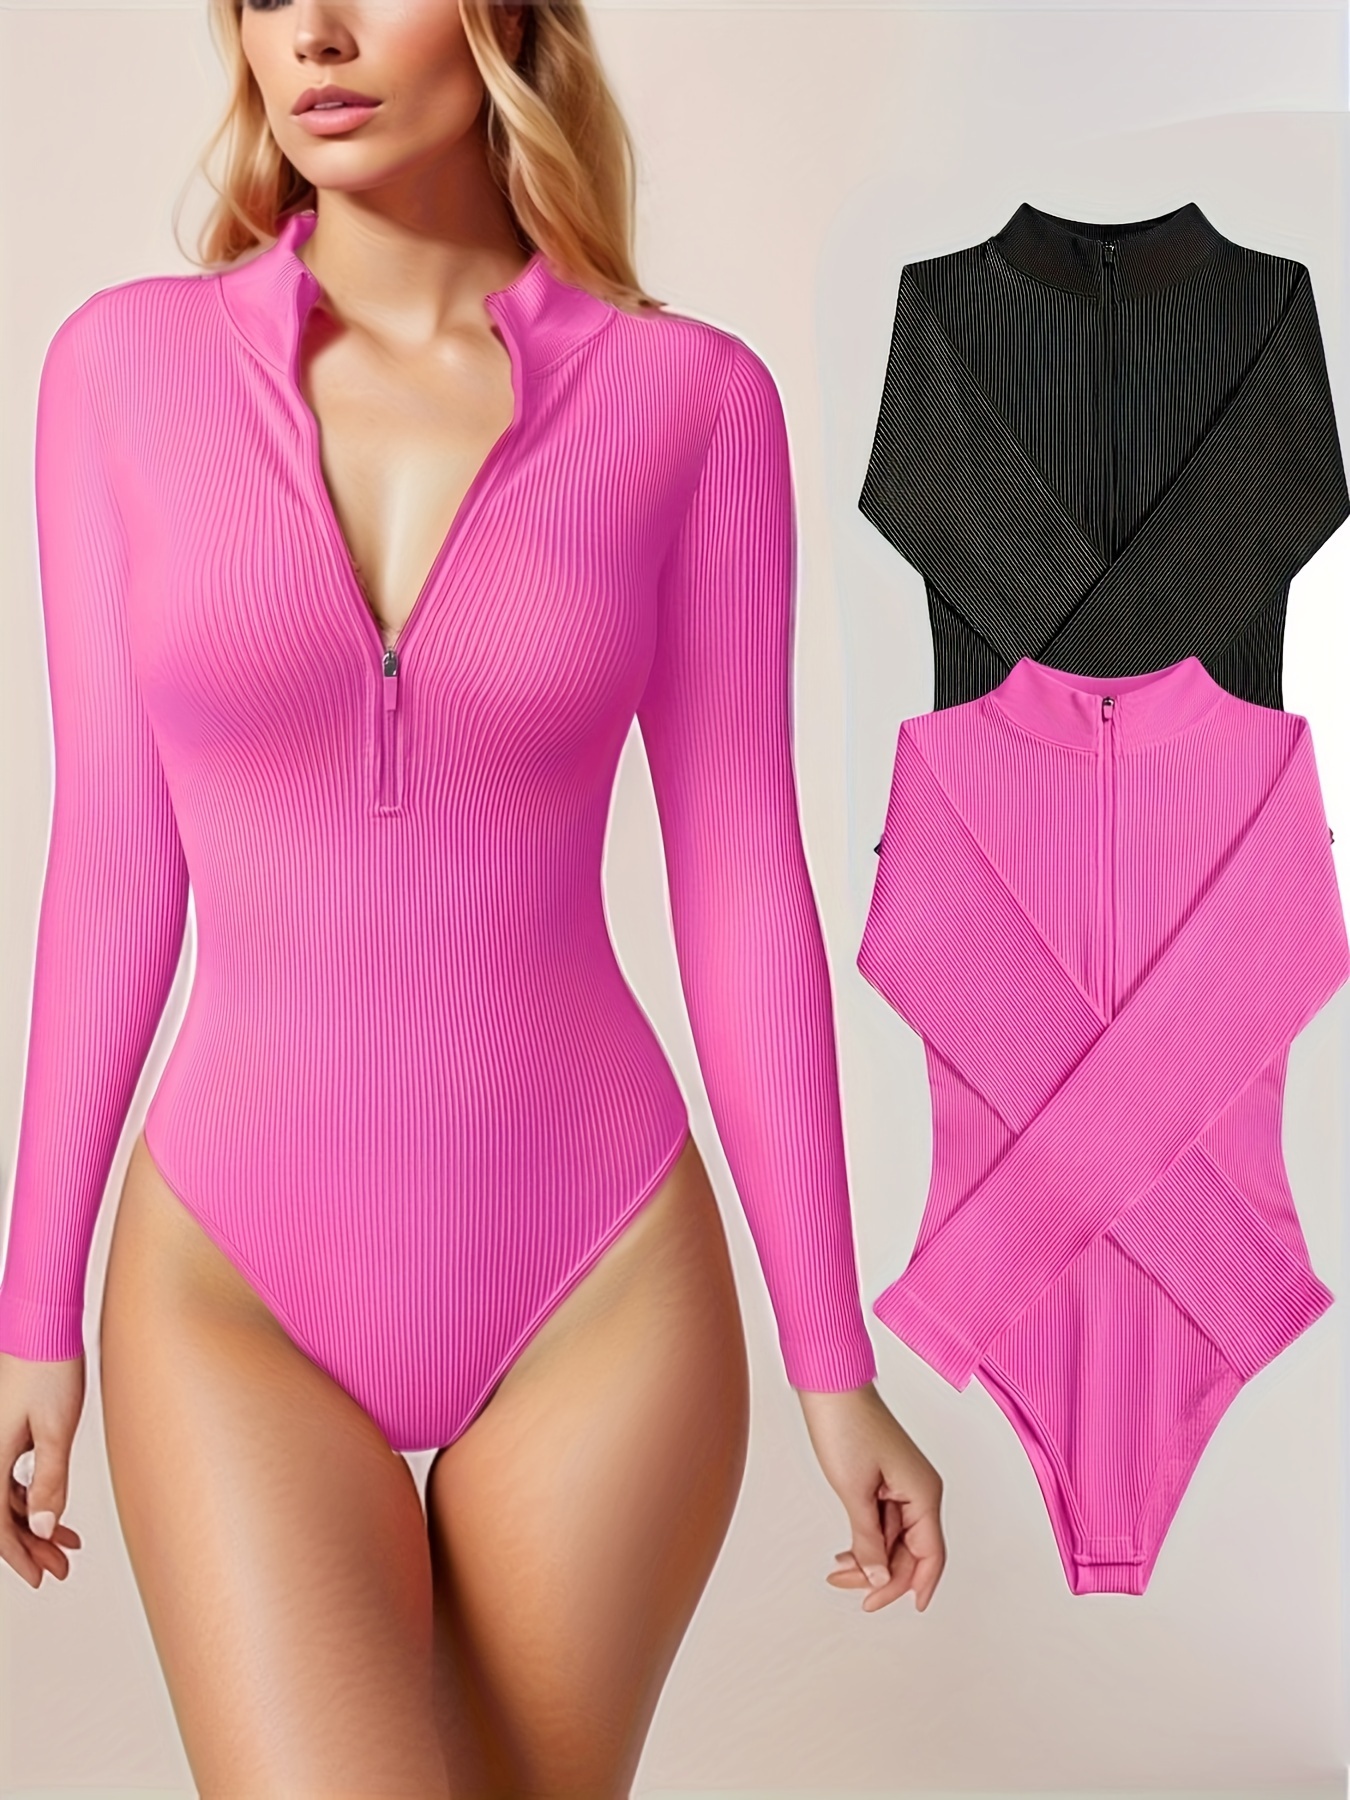 Women's High Cut Long Sleeve Neon Bodysuit Thong Leotard (Color